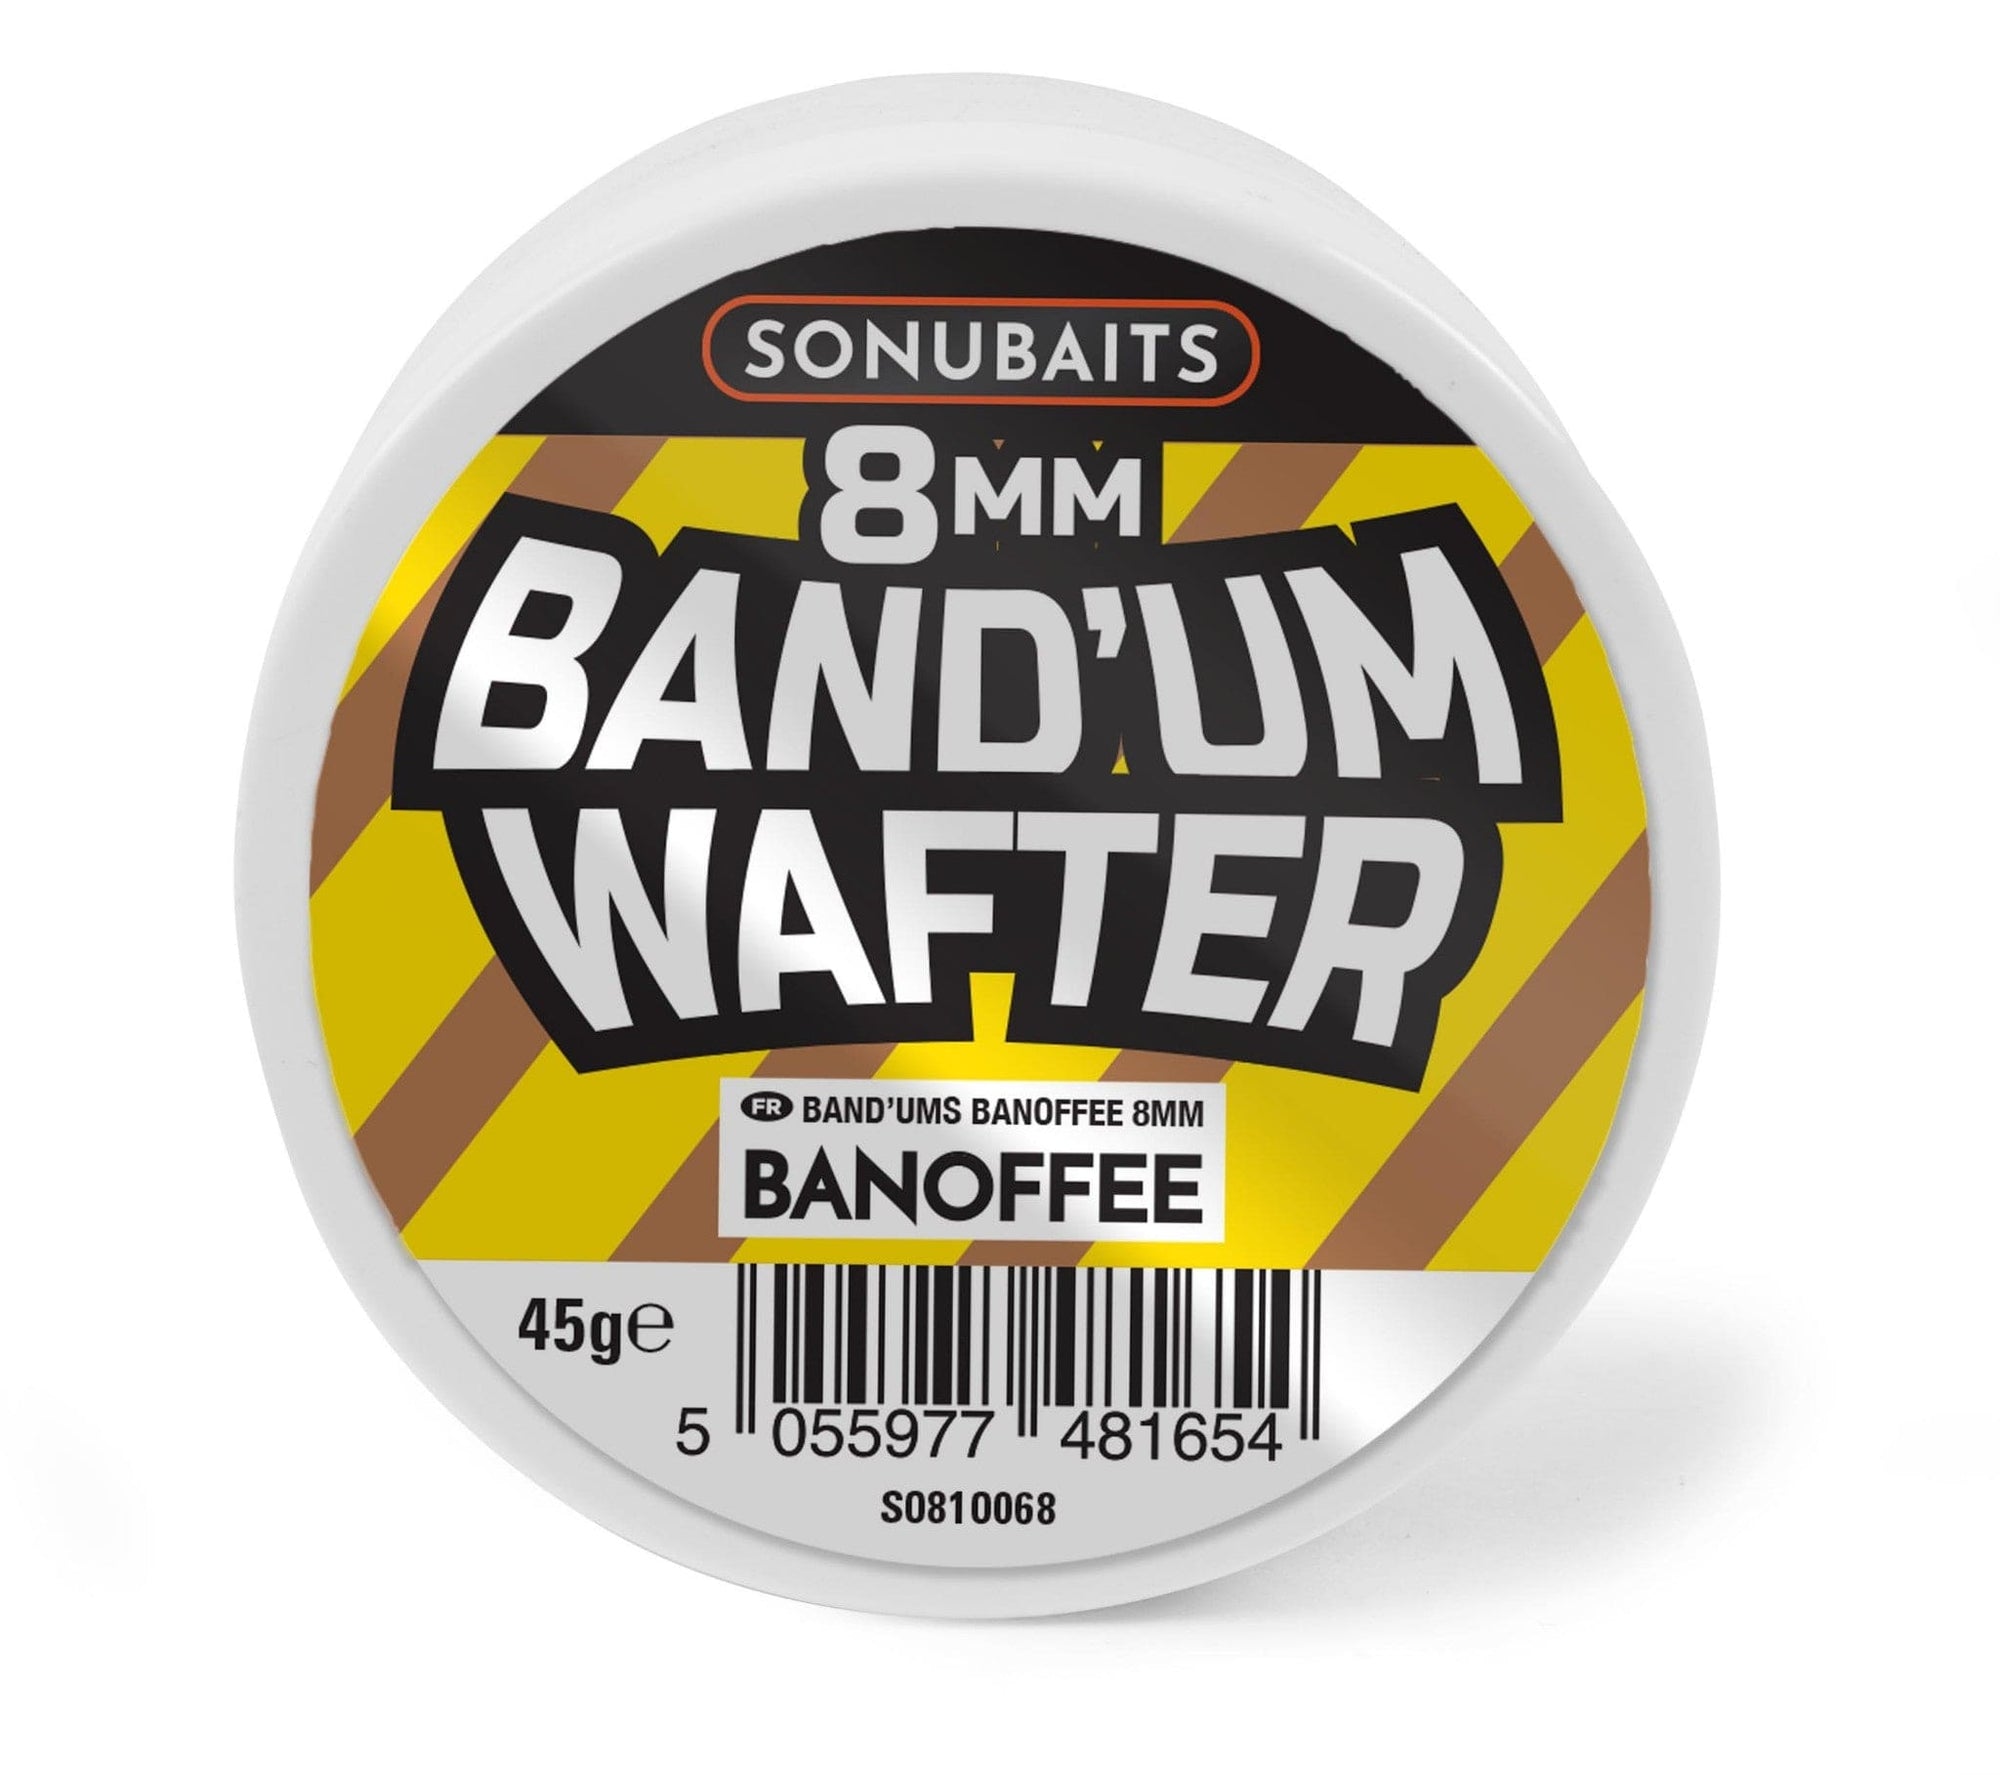 Sonubaits Band'um Wafters - Banoffee 8mm.